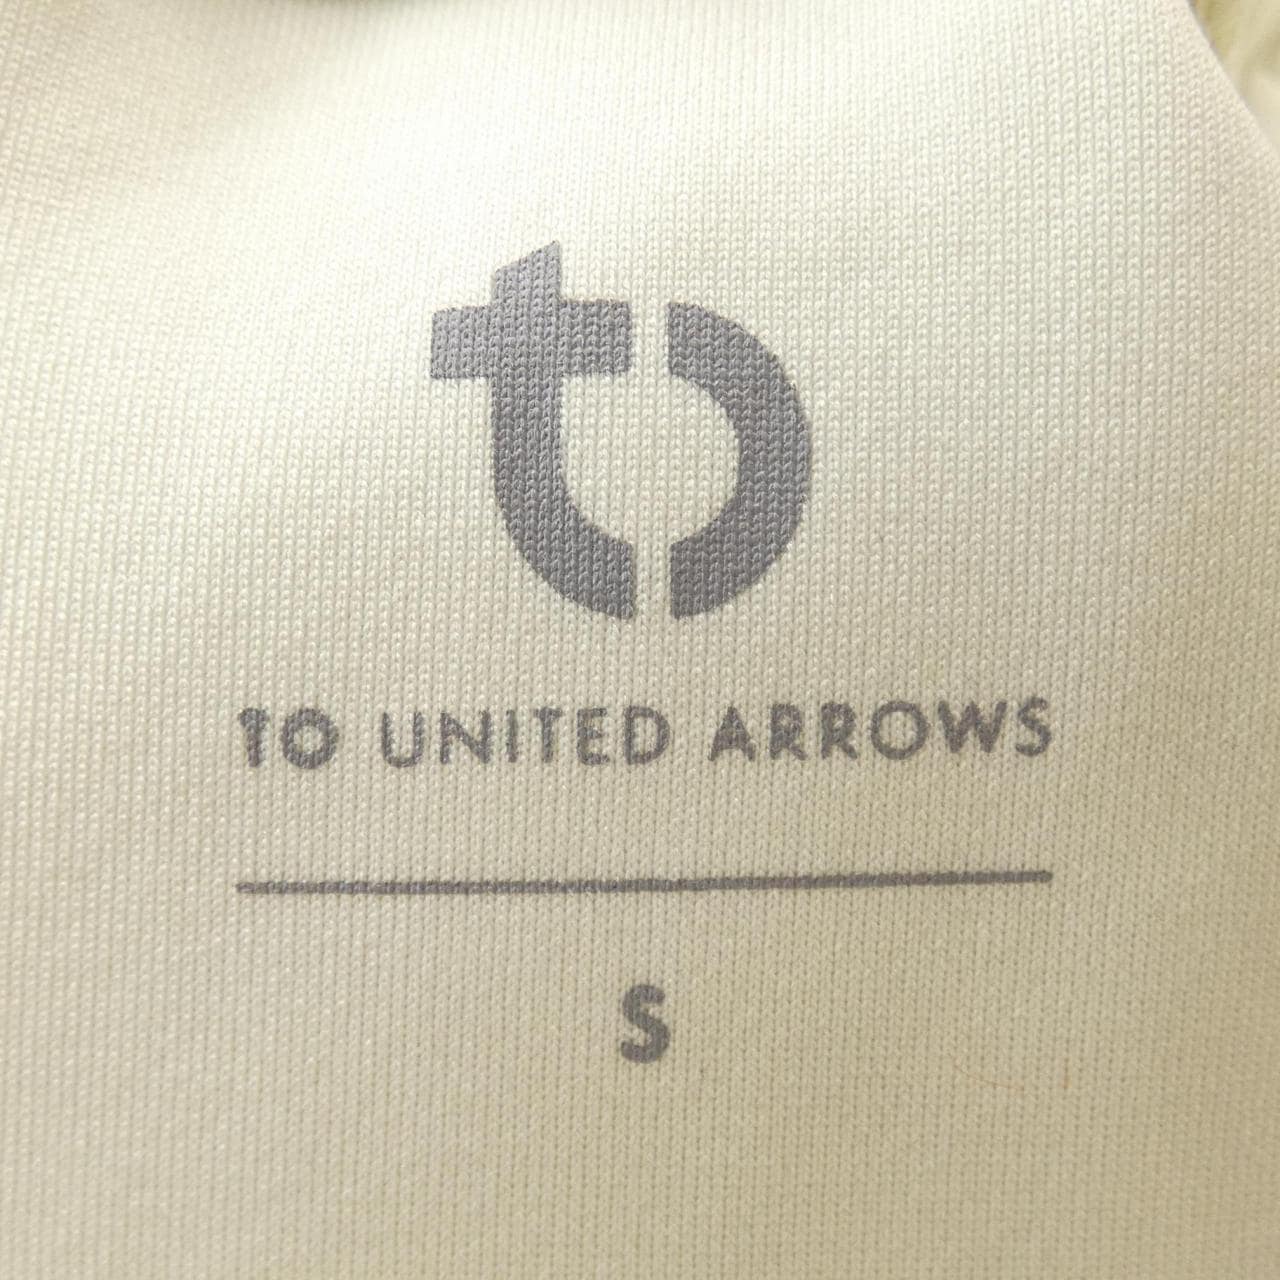 United Arrows UNITED ARROWS Pants